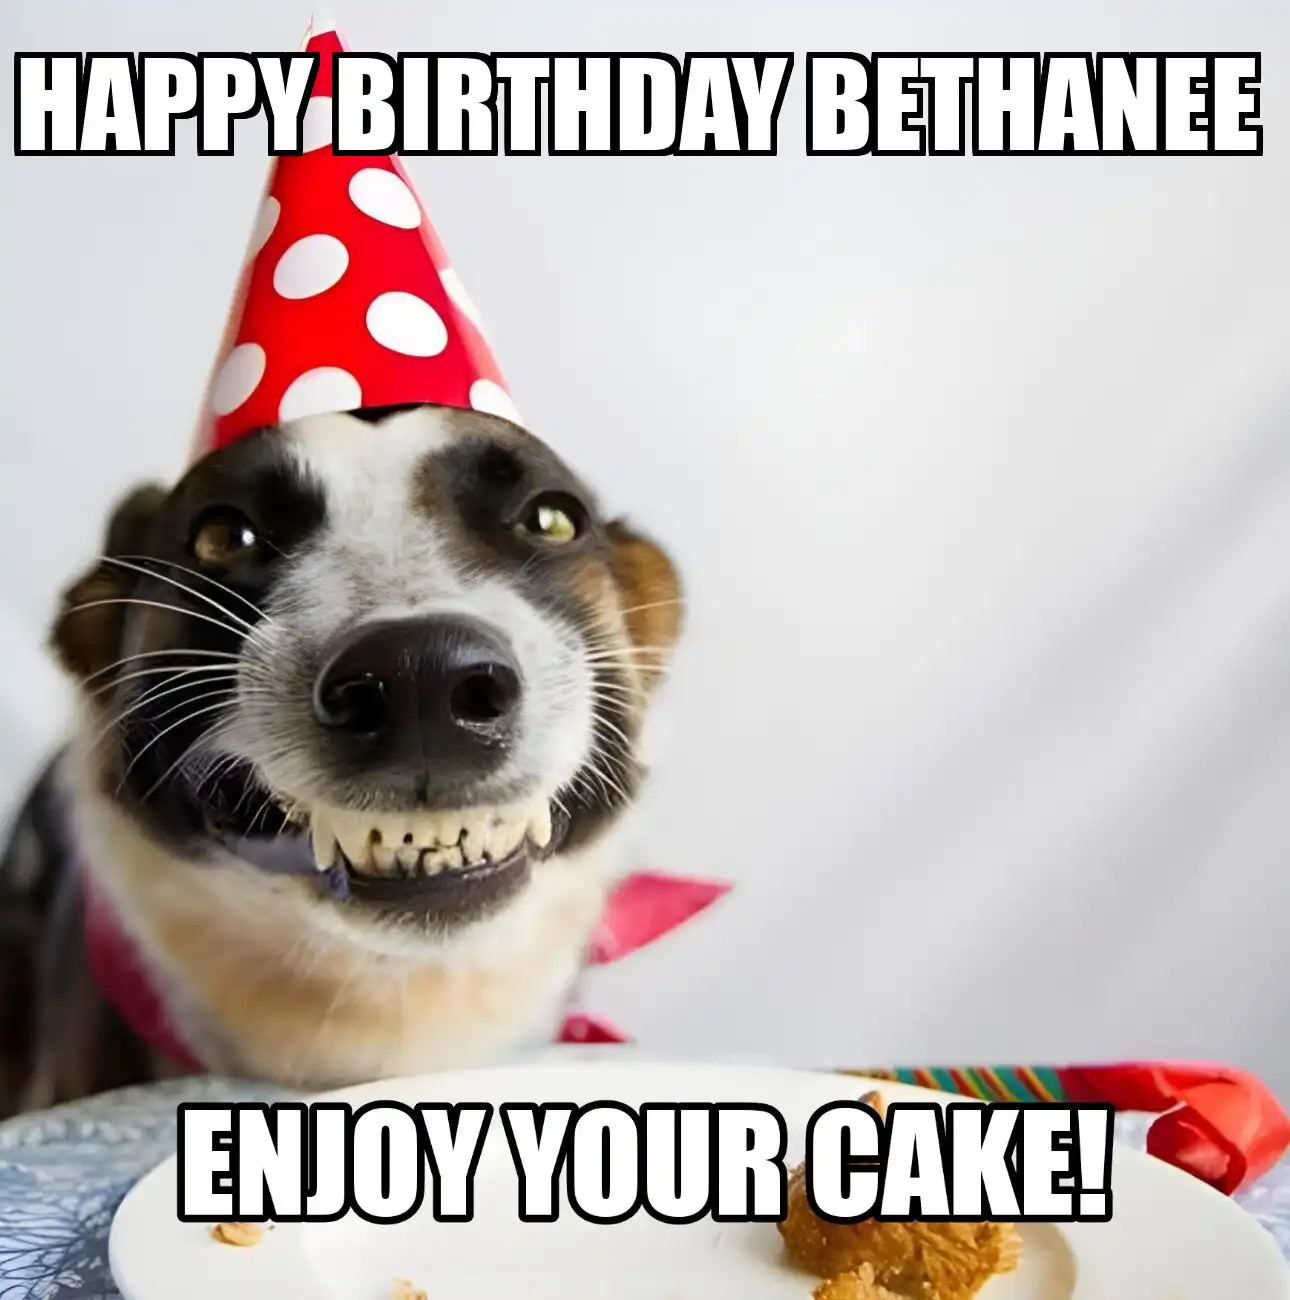 Happy Birthday Bethanee Enjoy Your Cake Dog Meme